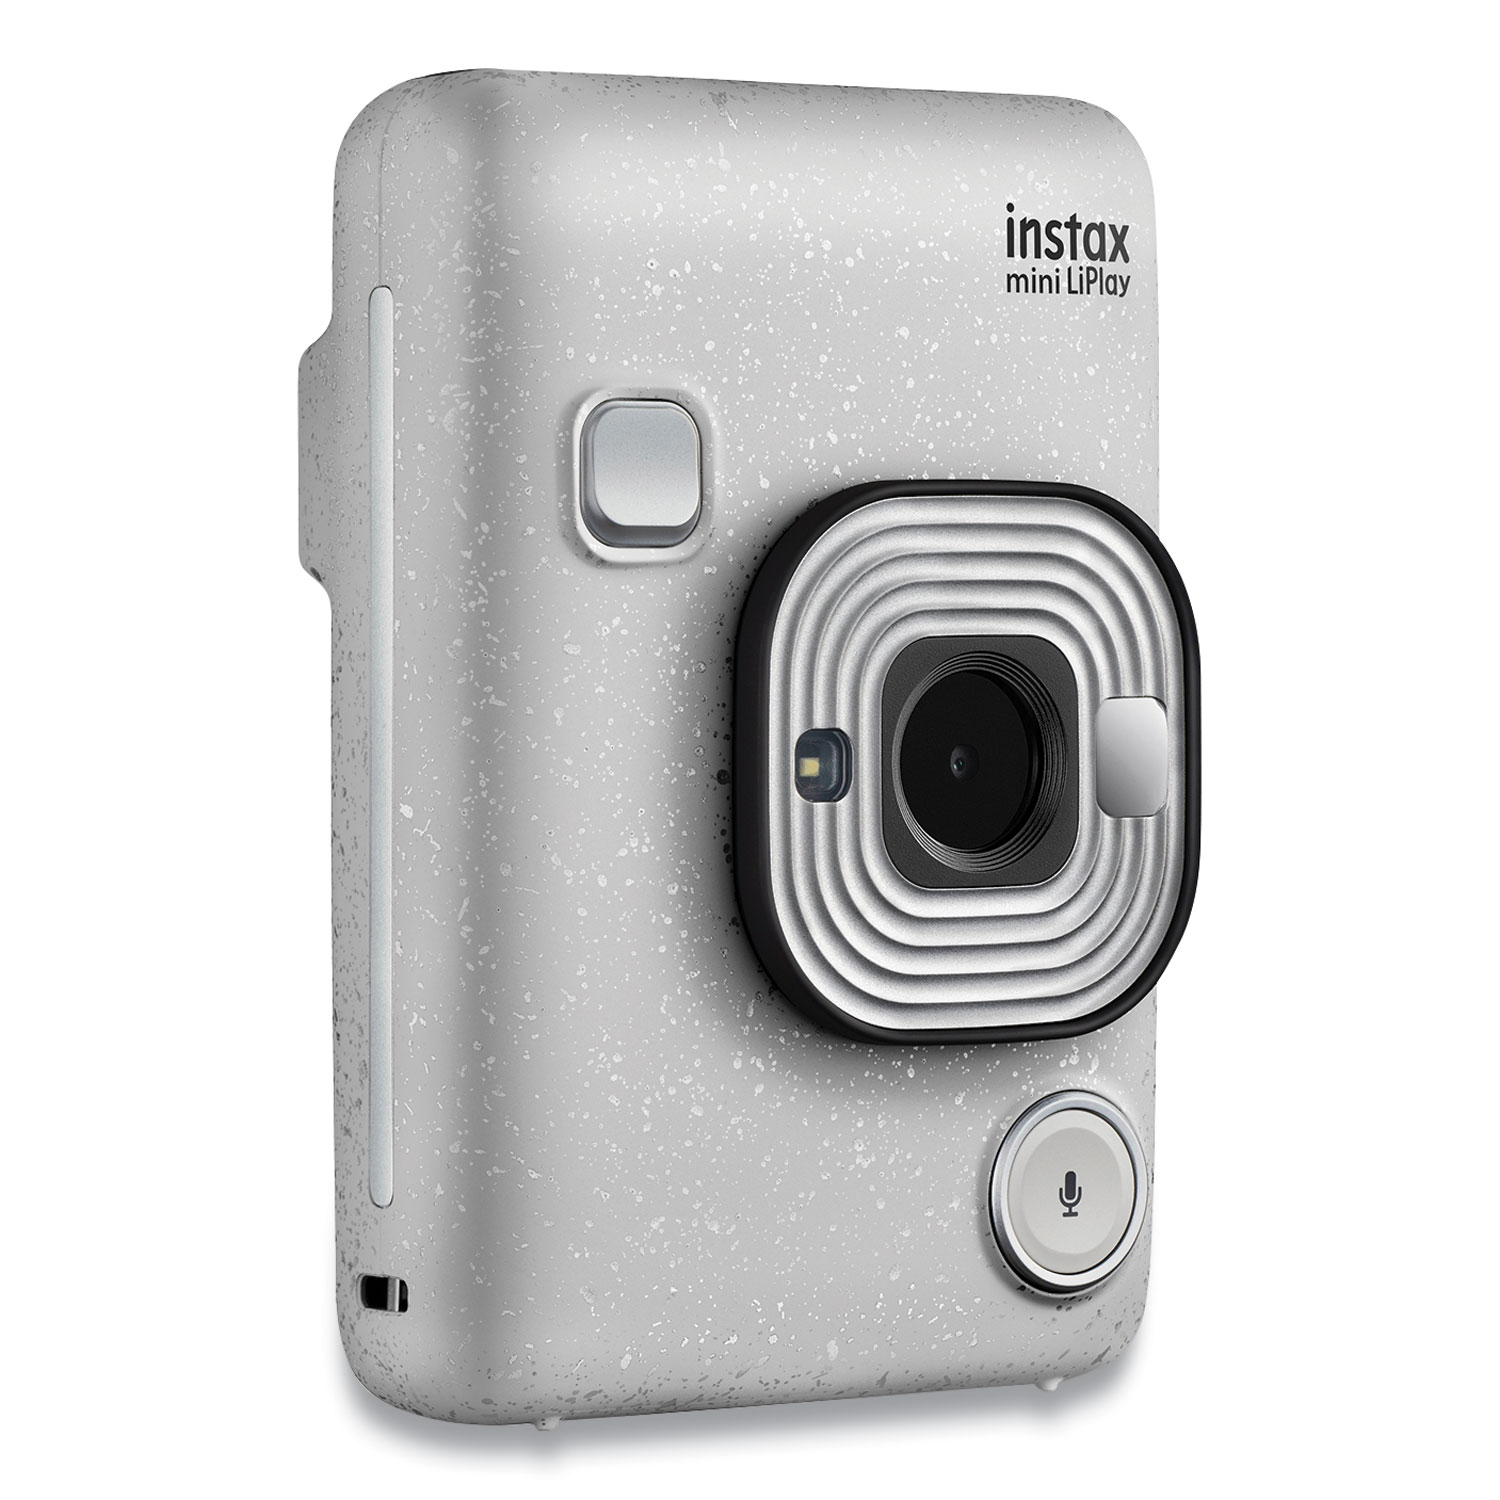 Fujifilm Instax Mini LiPlay Instant Camera, Stone White